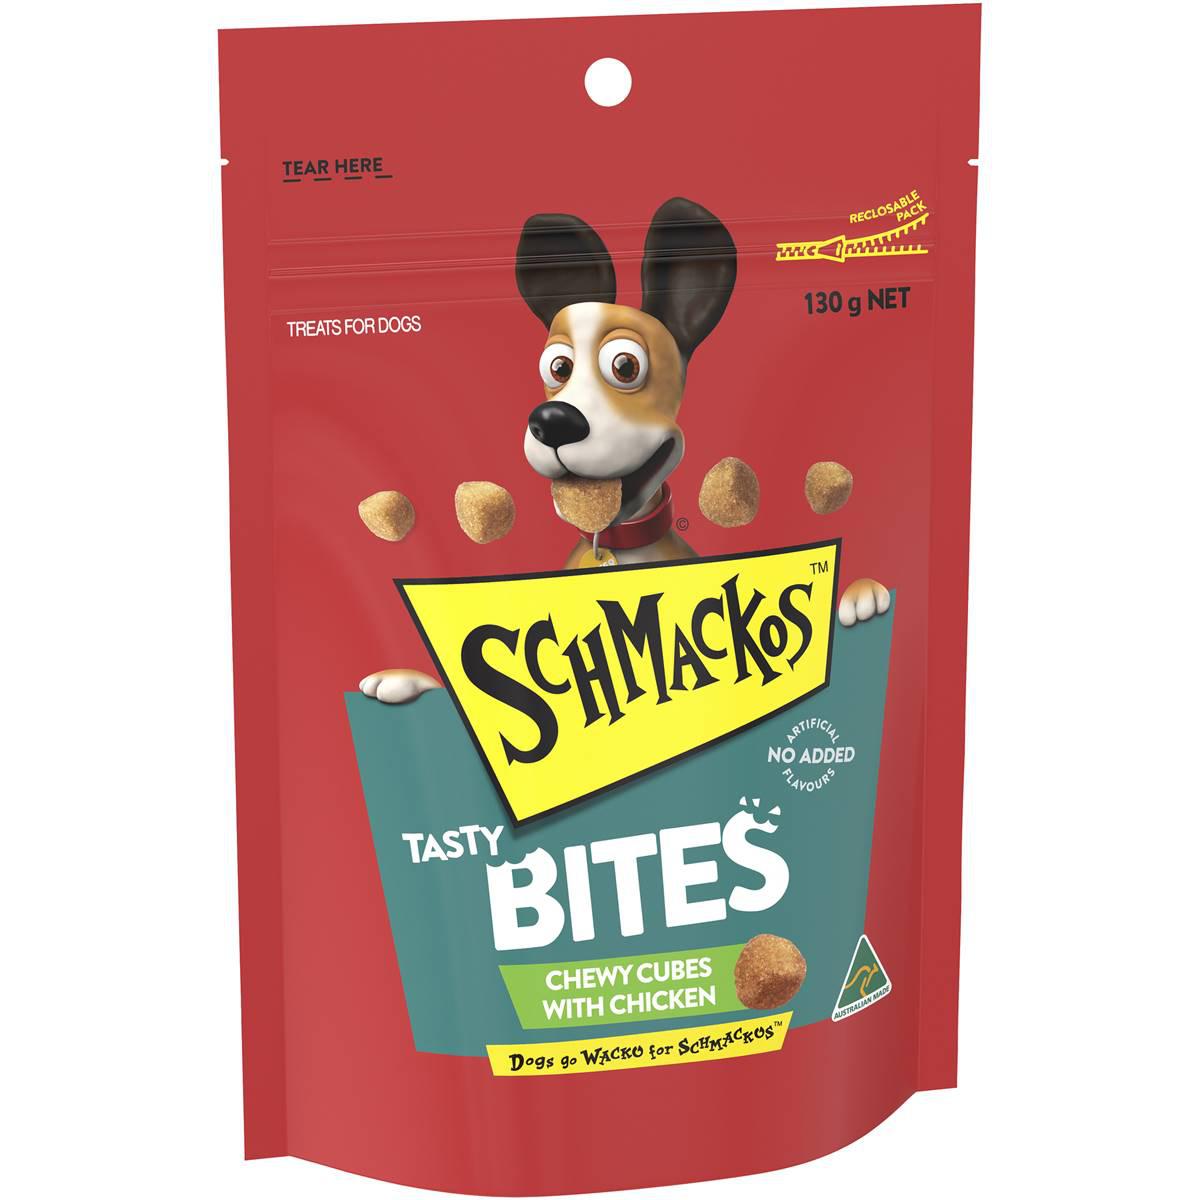 Schmackos Tasty Bites Chewy Cubes With Chicken Dog Treats 130g